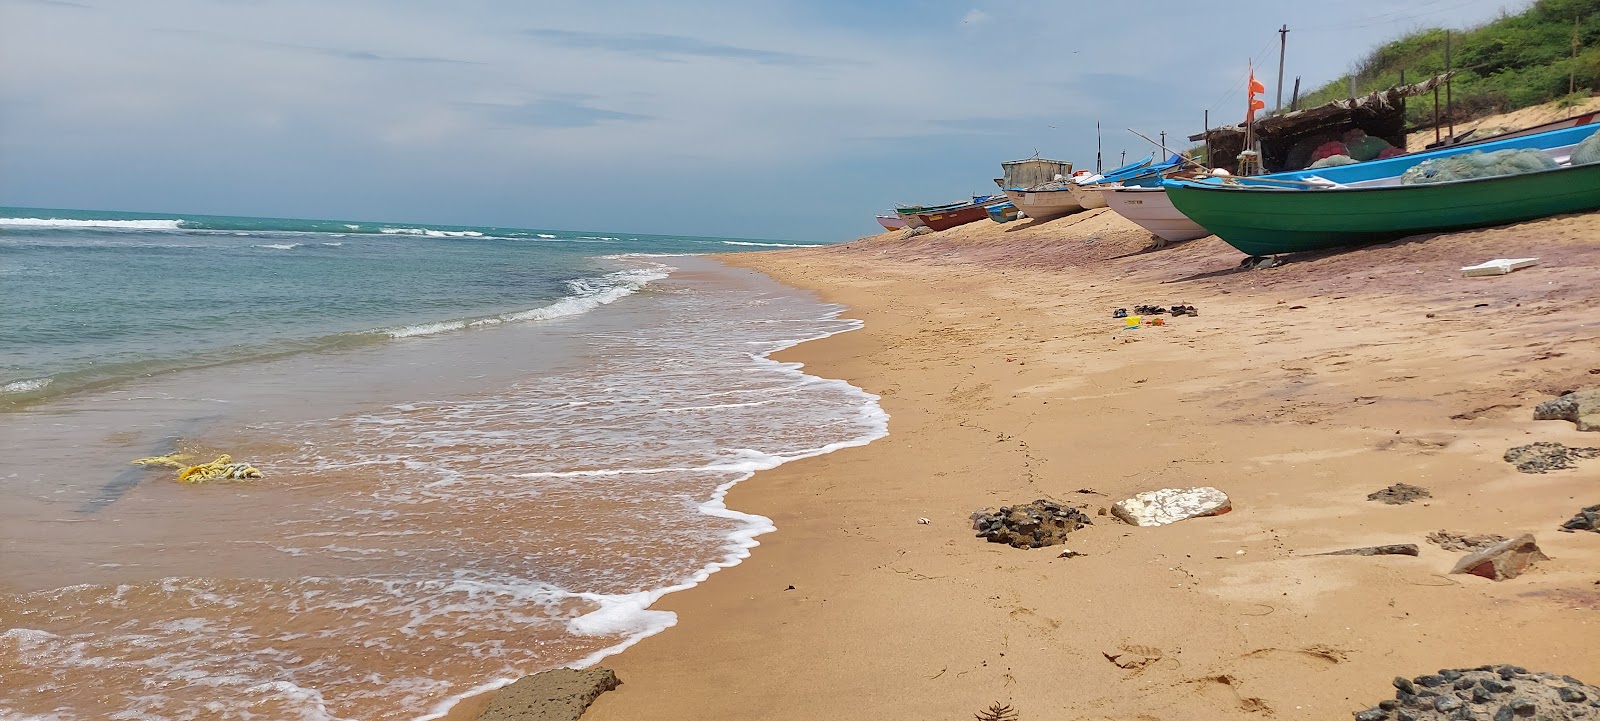 Fotografija Kooduthalai beach z svetel pesek površino